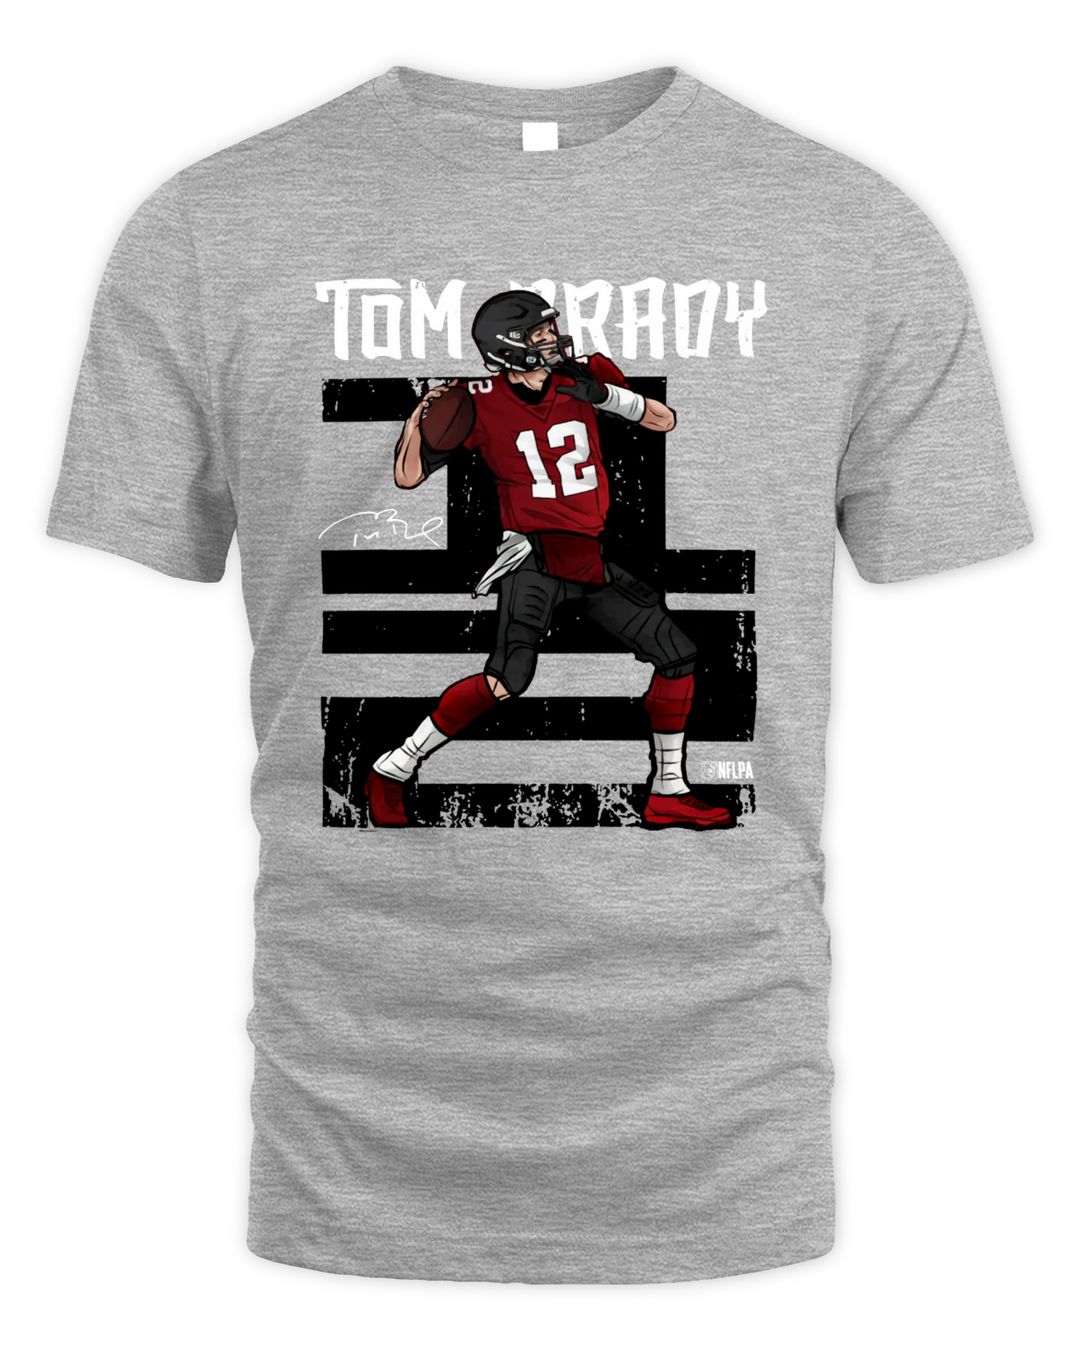 Tom Brady Merch Number Shirt